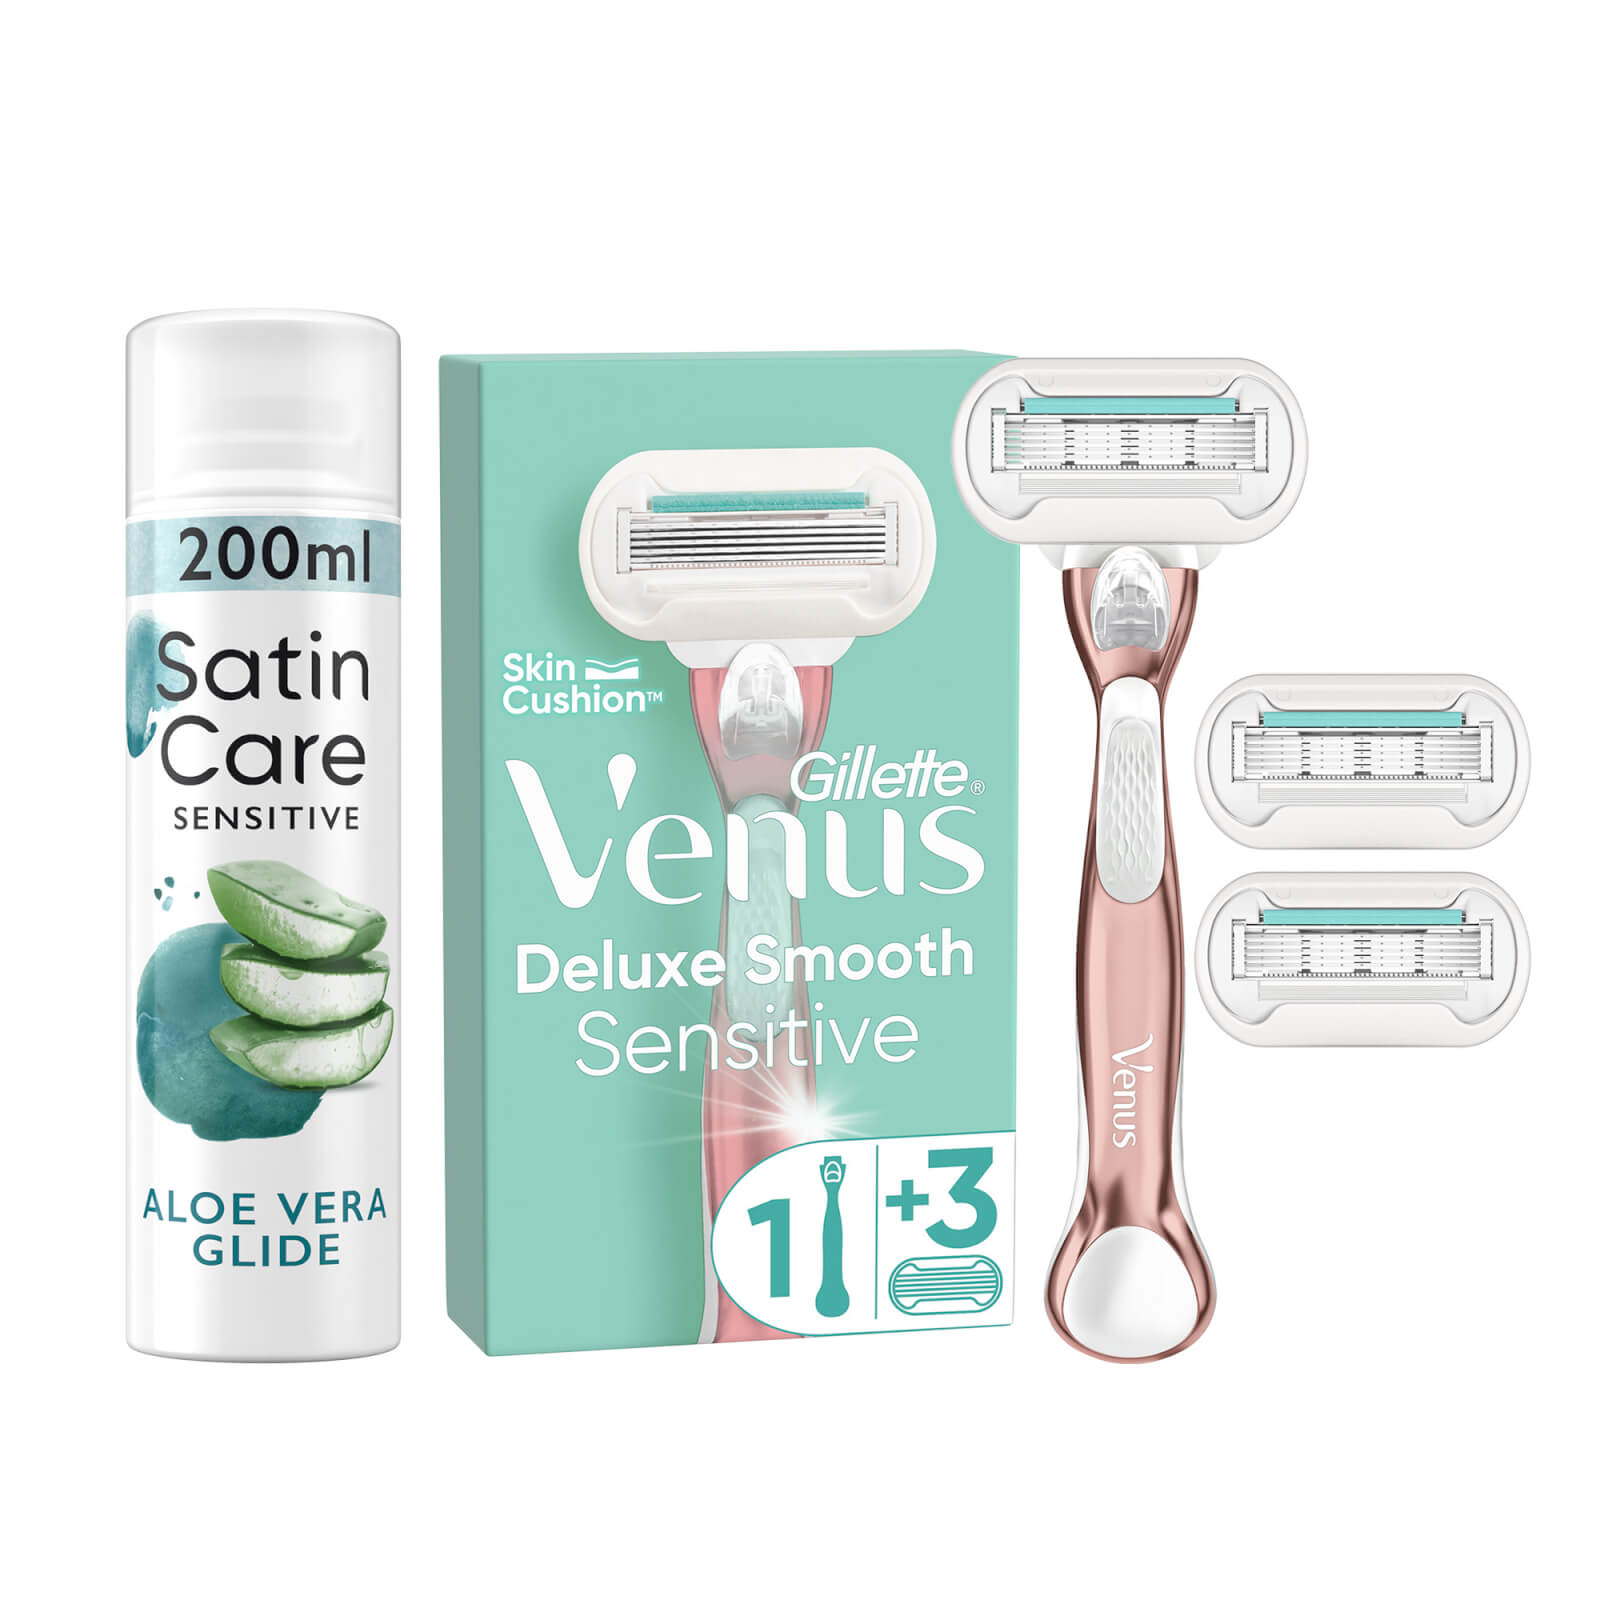 Venus Deluxe Smooth Sensitive Rose Gold Razor Starter Pack - Handle with Aloe Vera Glide shave prep